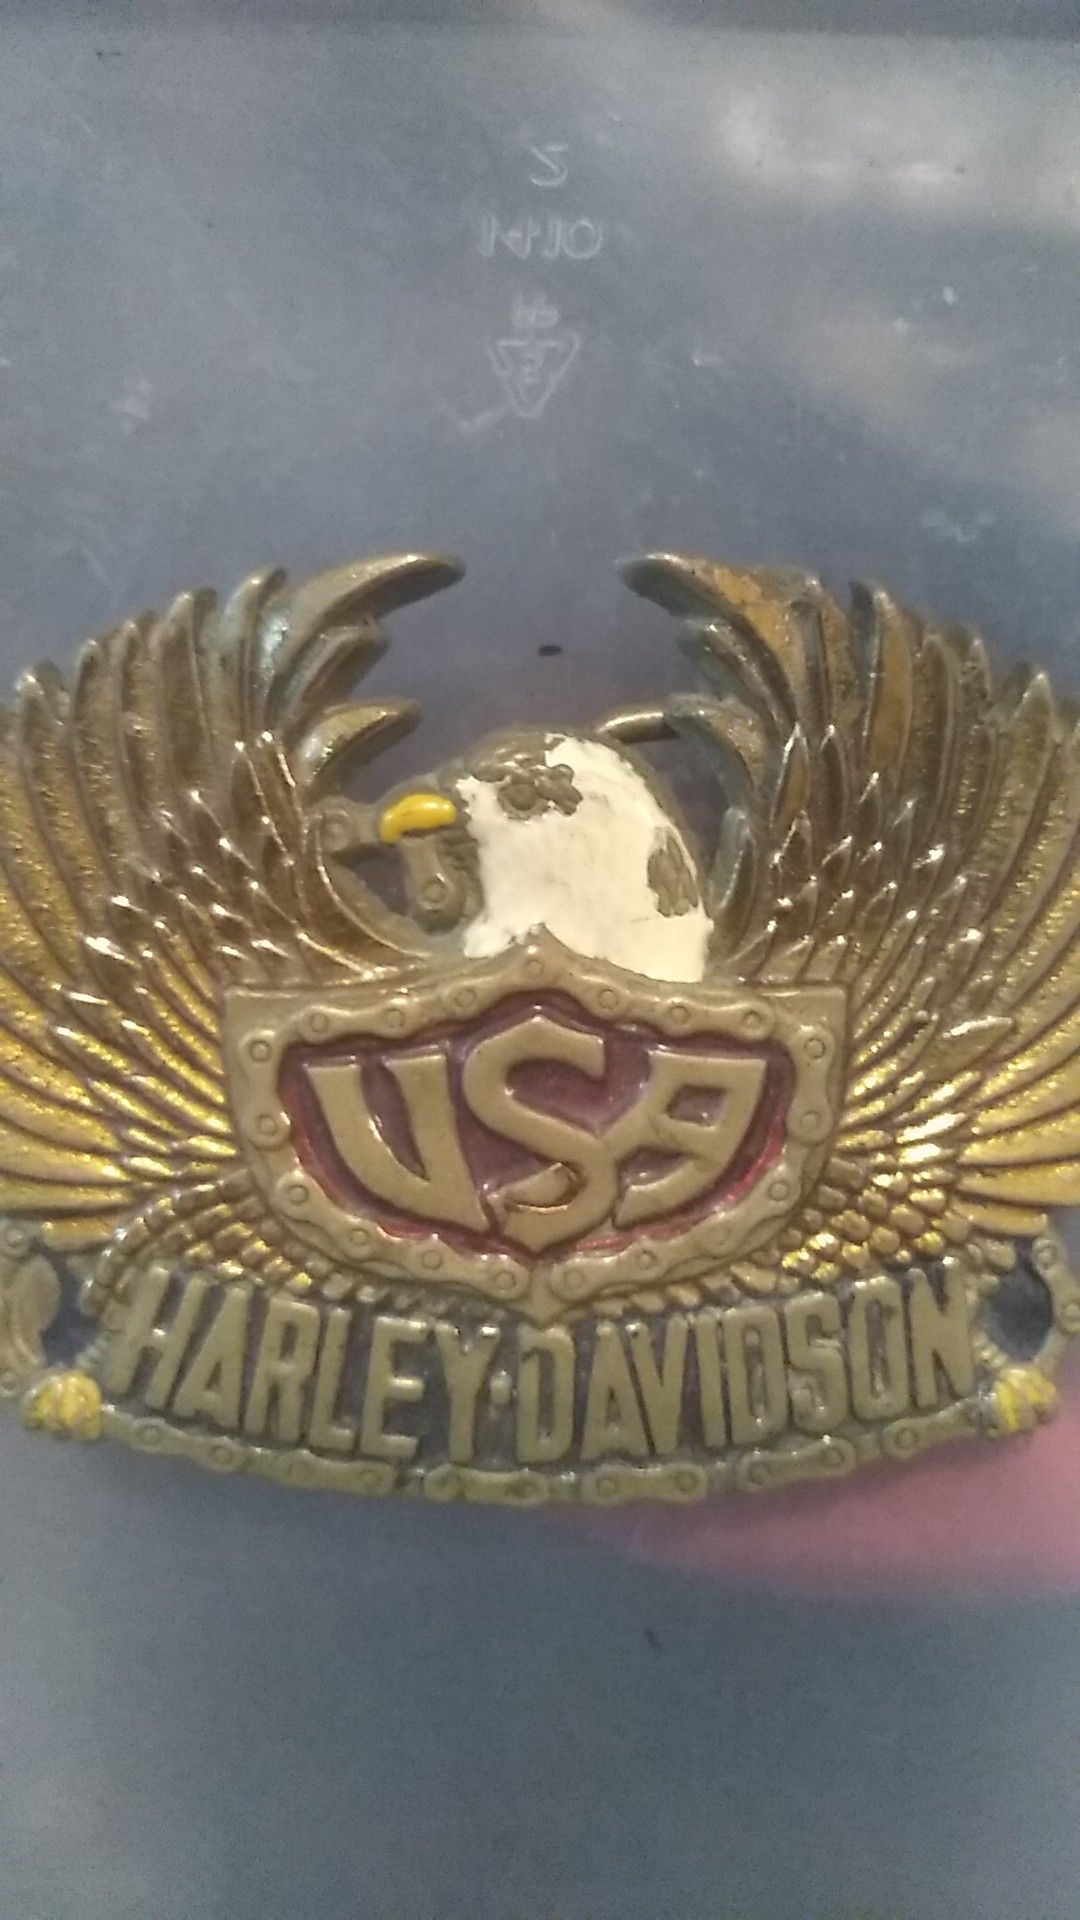 Harley Davidson brass belt buckle